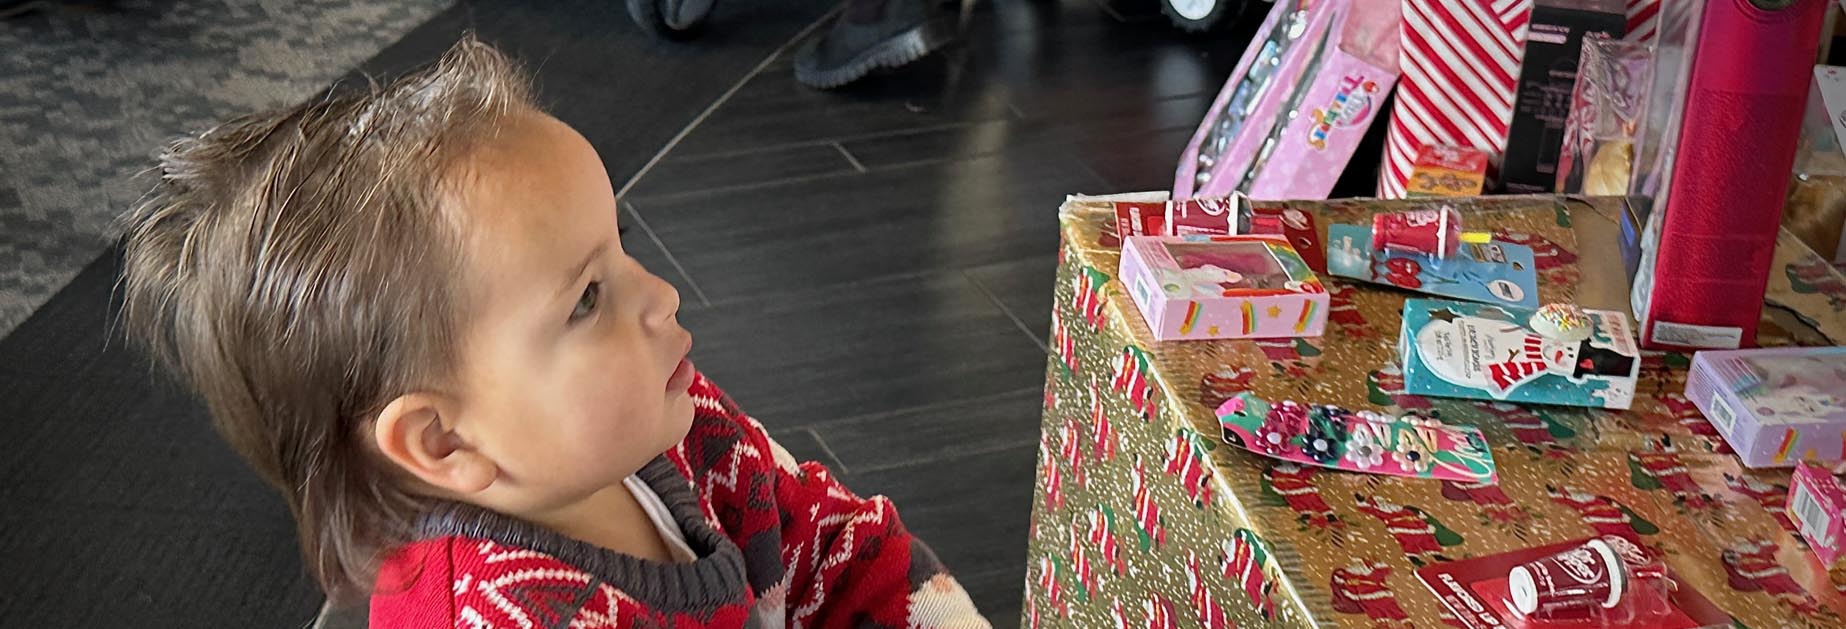 طفل صغير بجانب هدايا ملفوفة